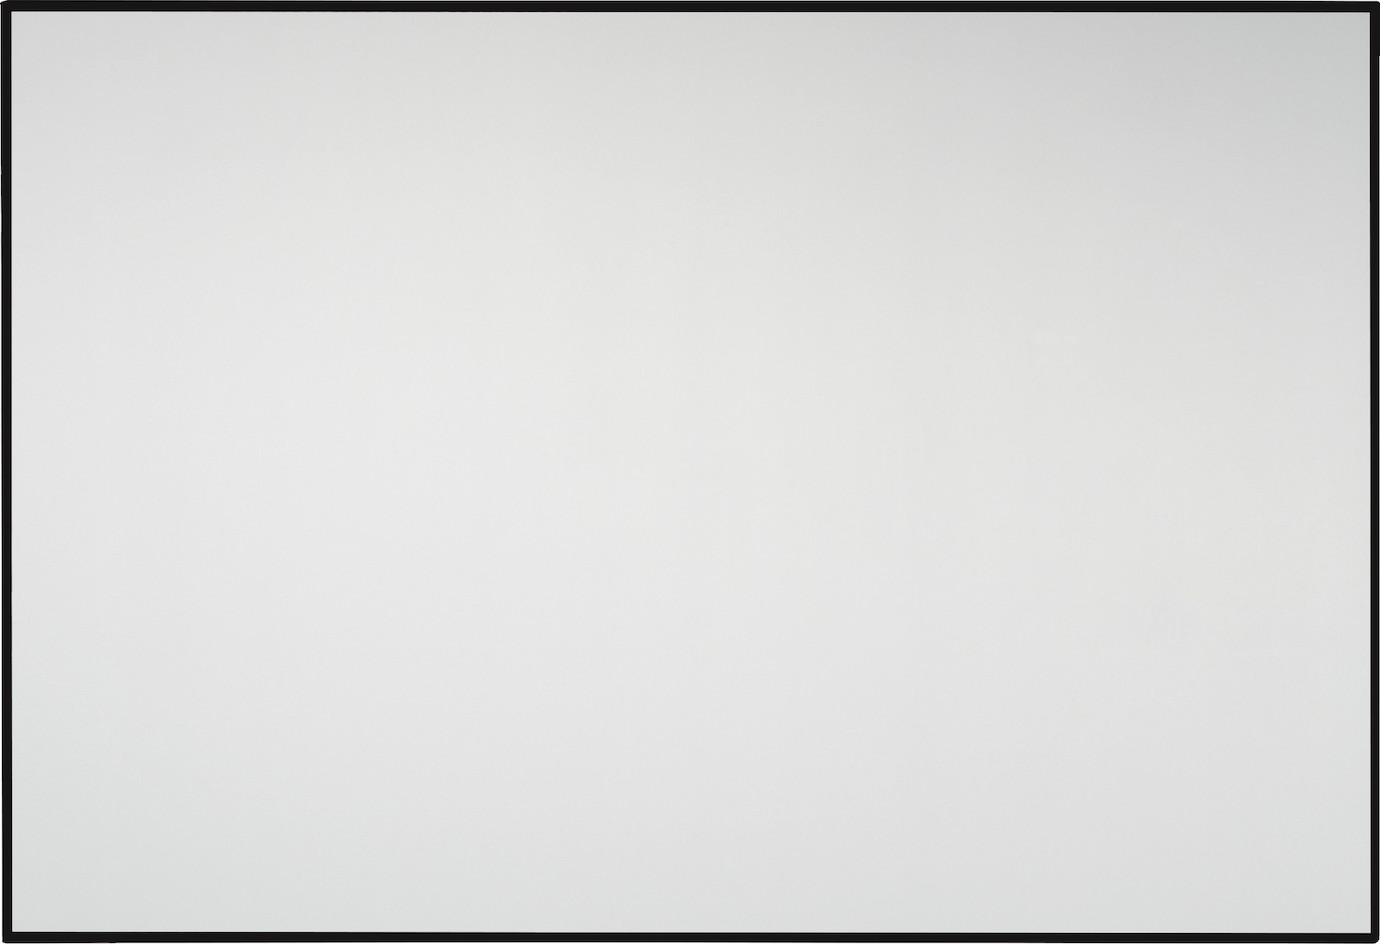 celexon HomeCinema Frame 265 x 149 cm, 120" - Dynamic Slate ALR